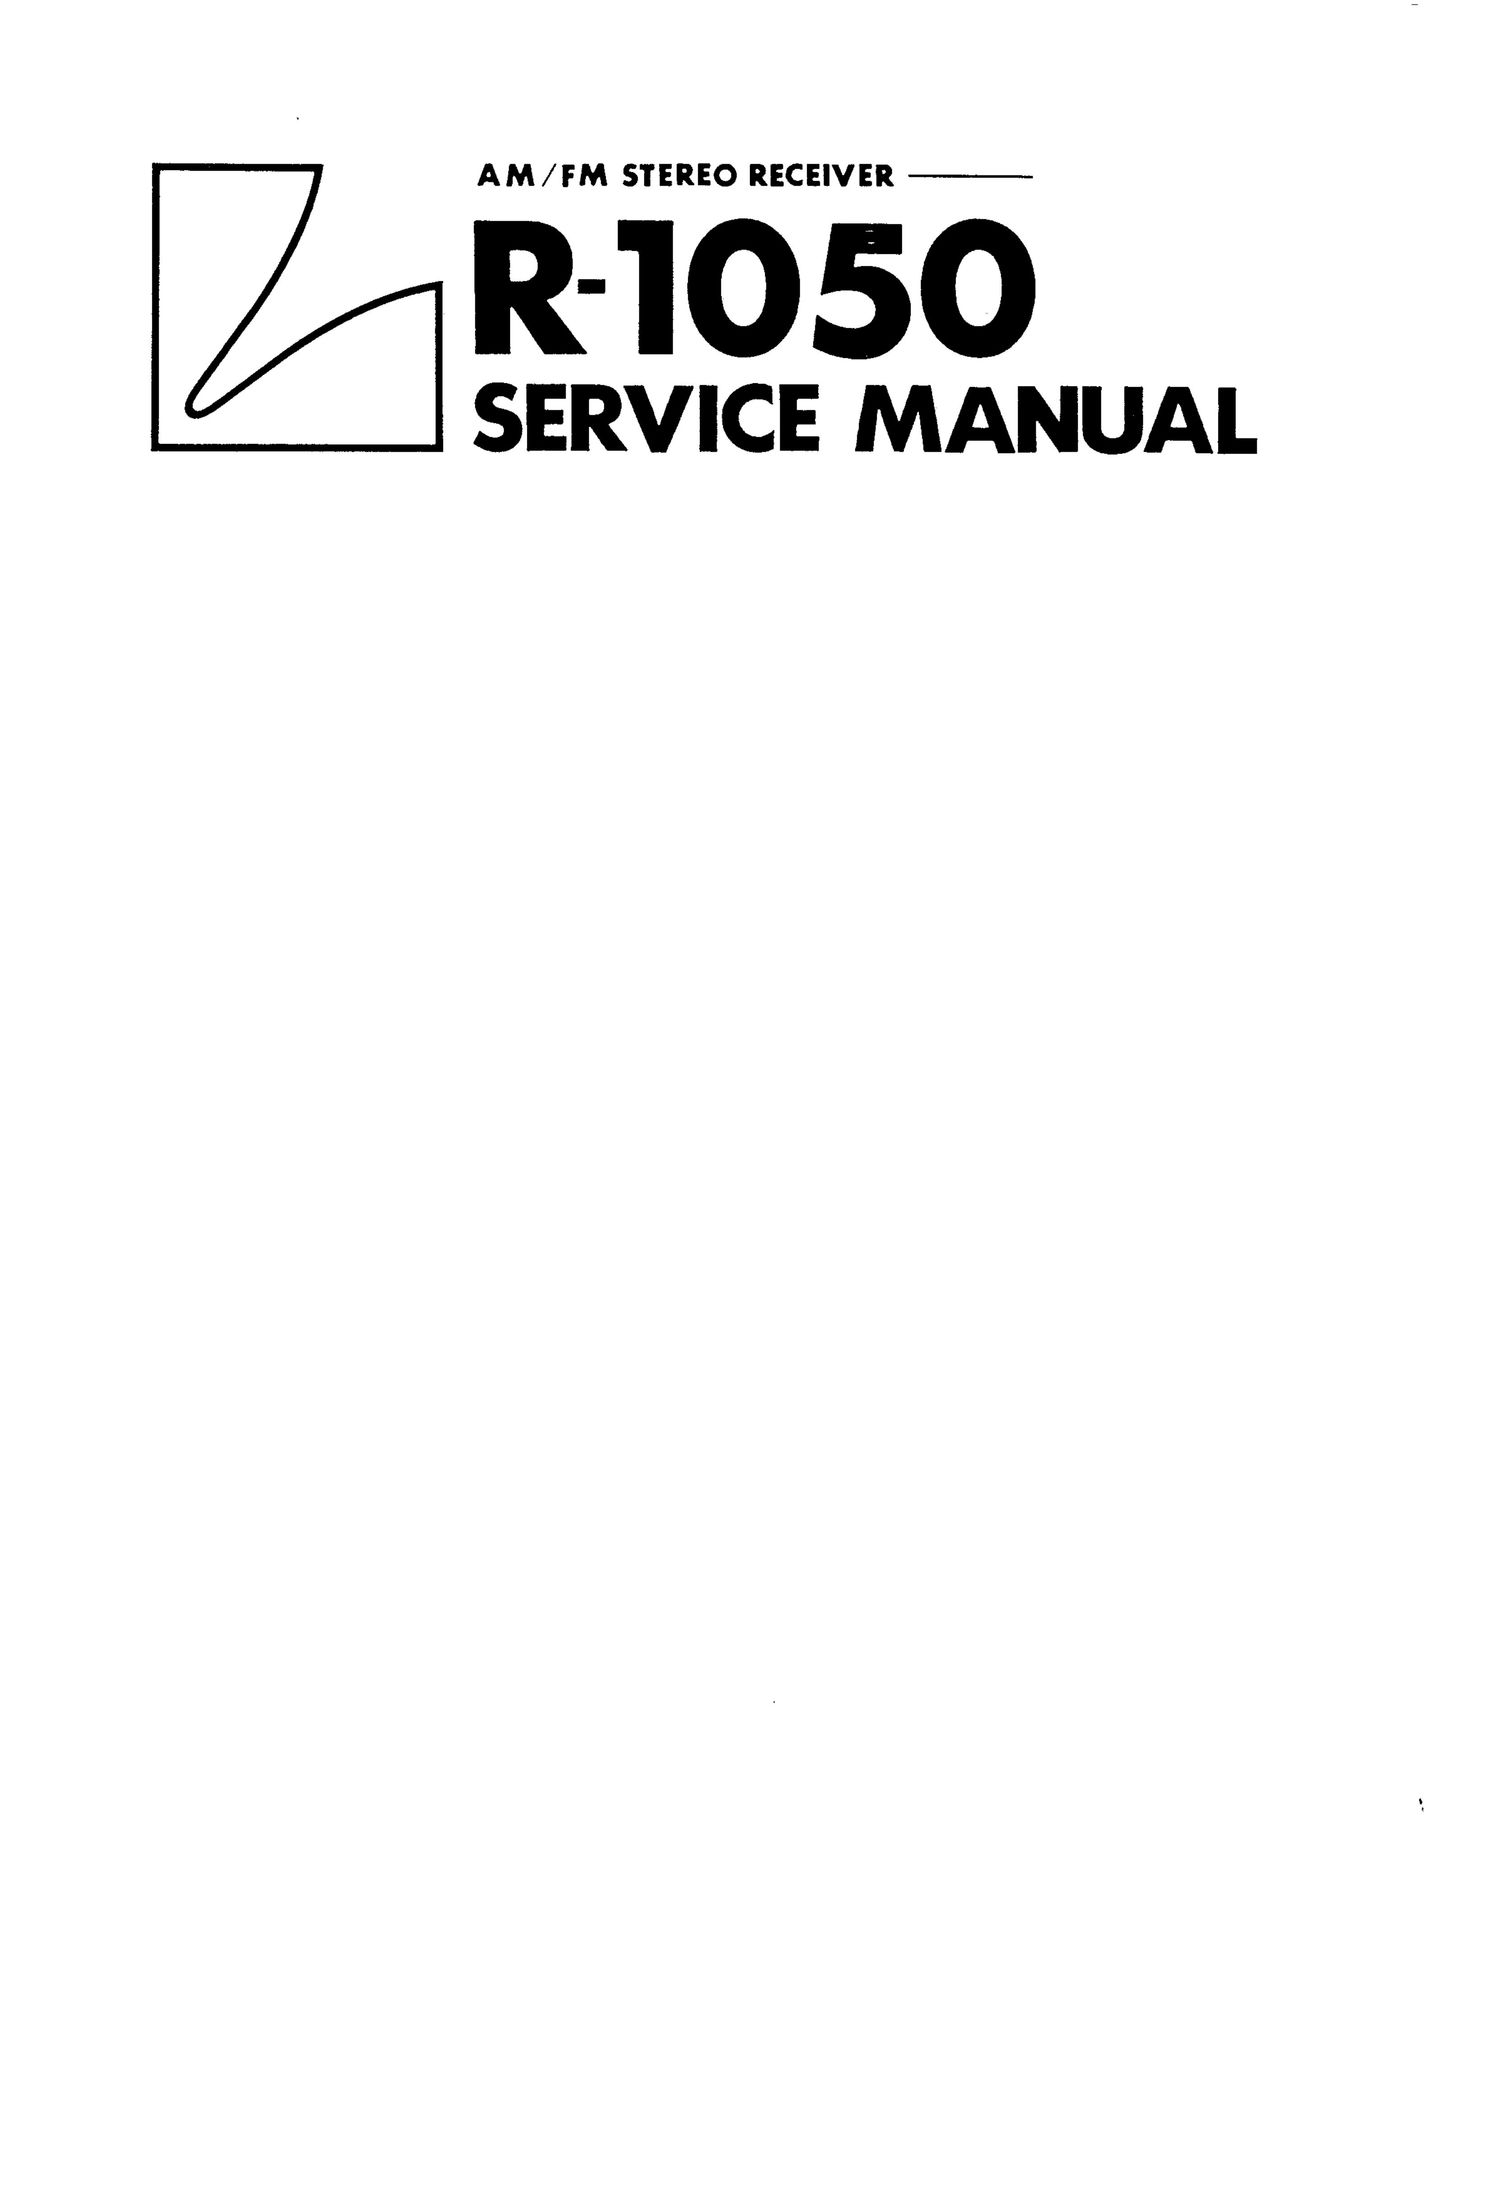 luxman r 1050 service manual